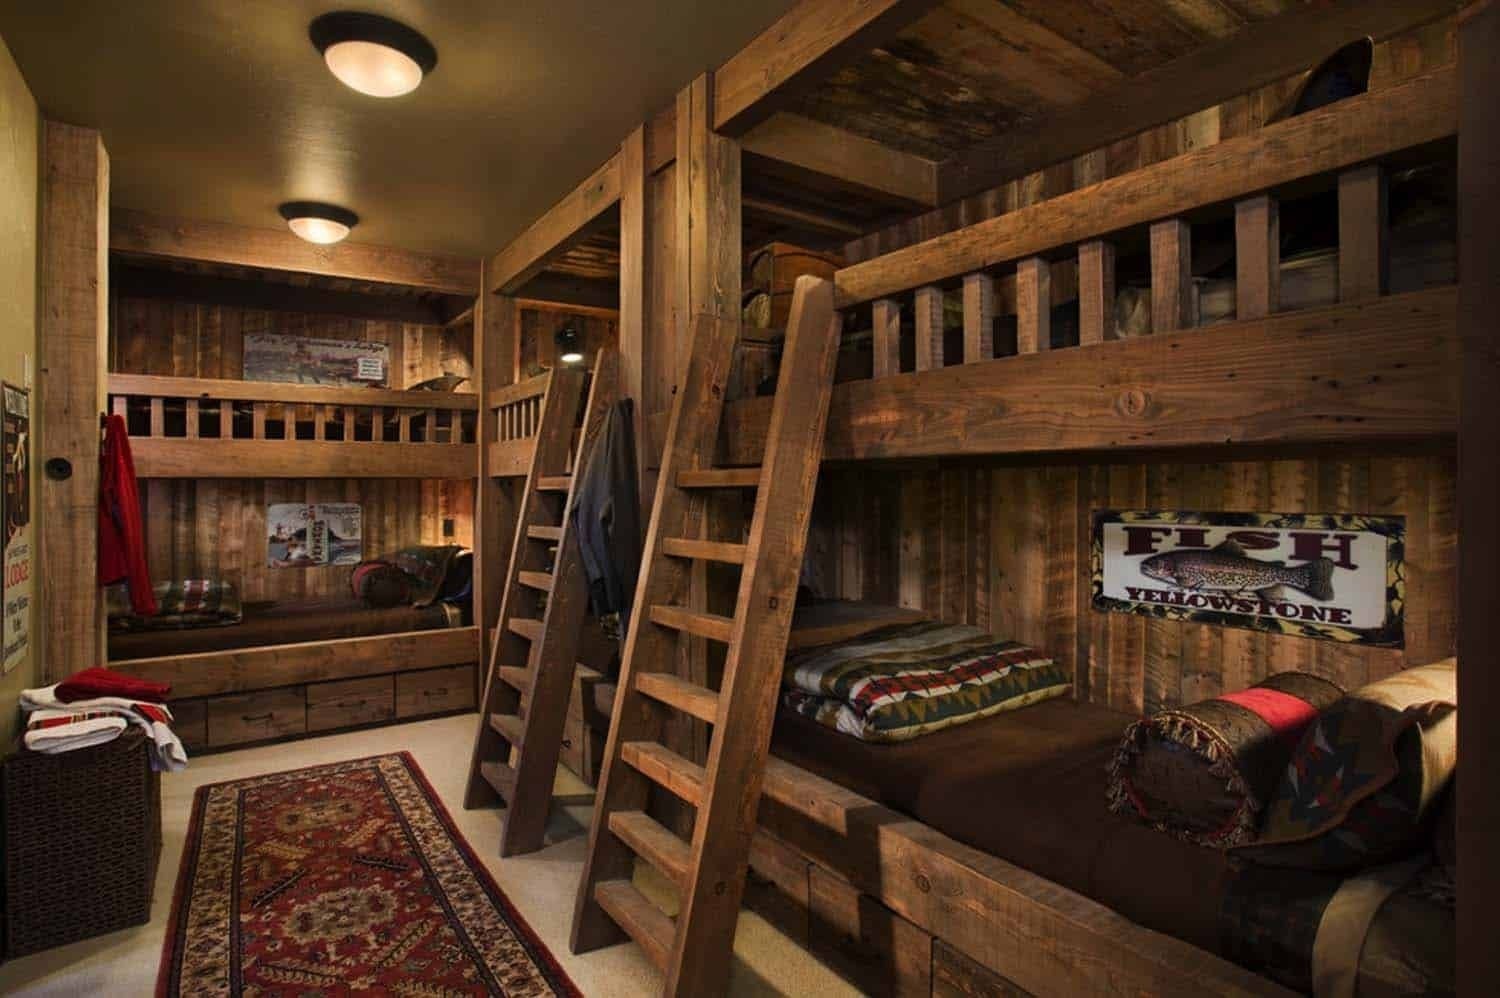 Sensational l shaped bunk beds decorating ideas for bedroom rustic